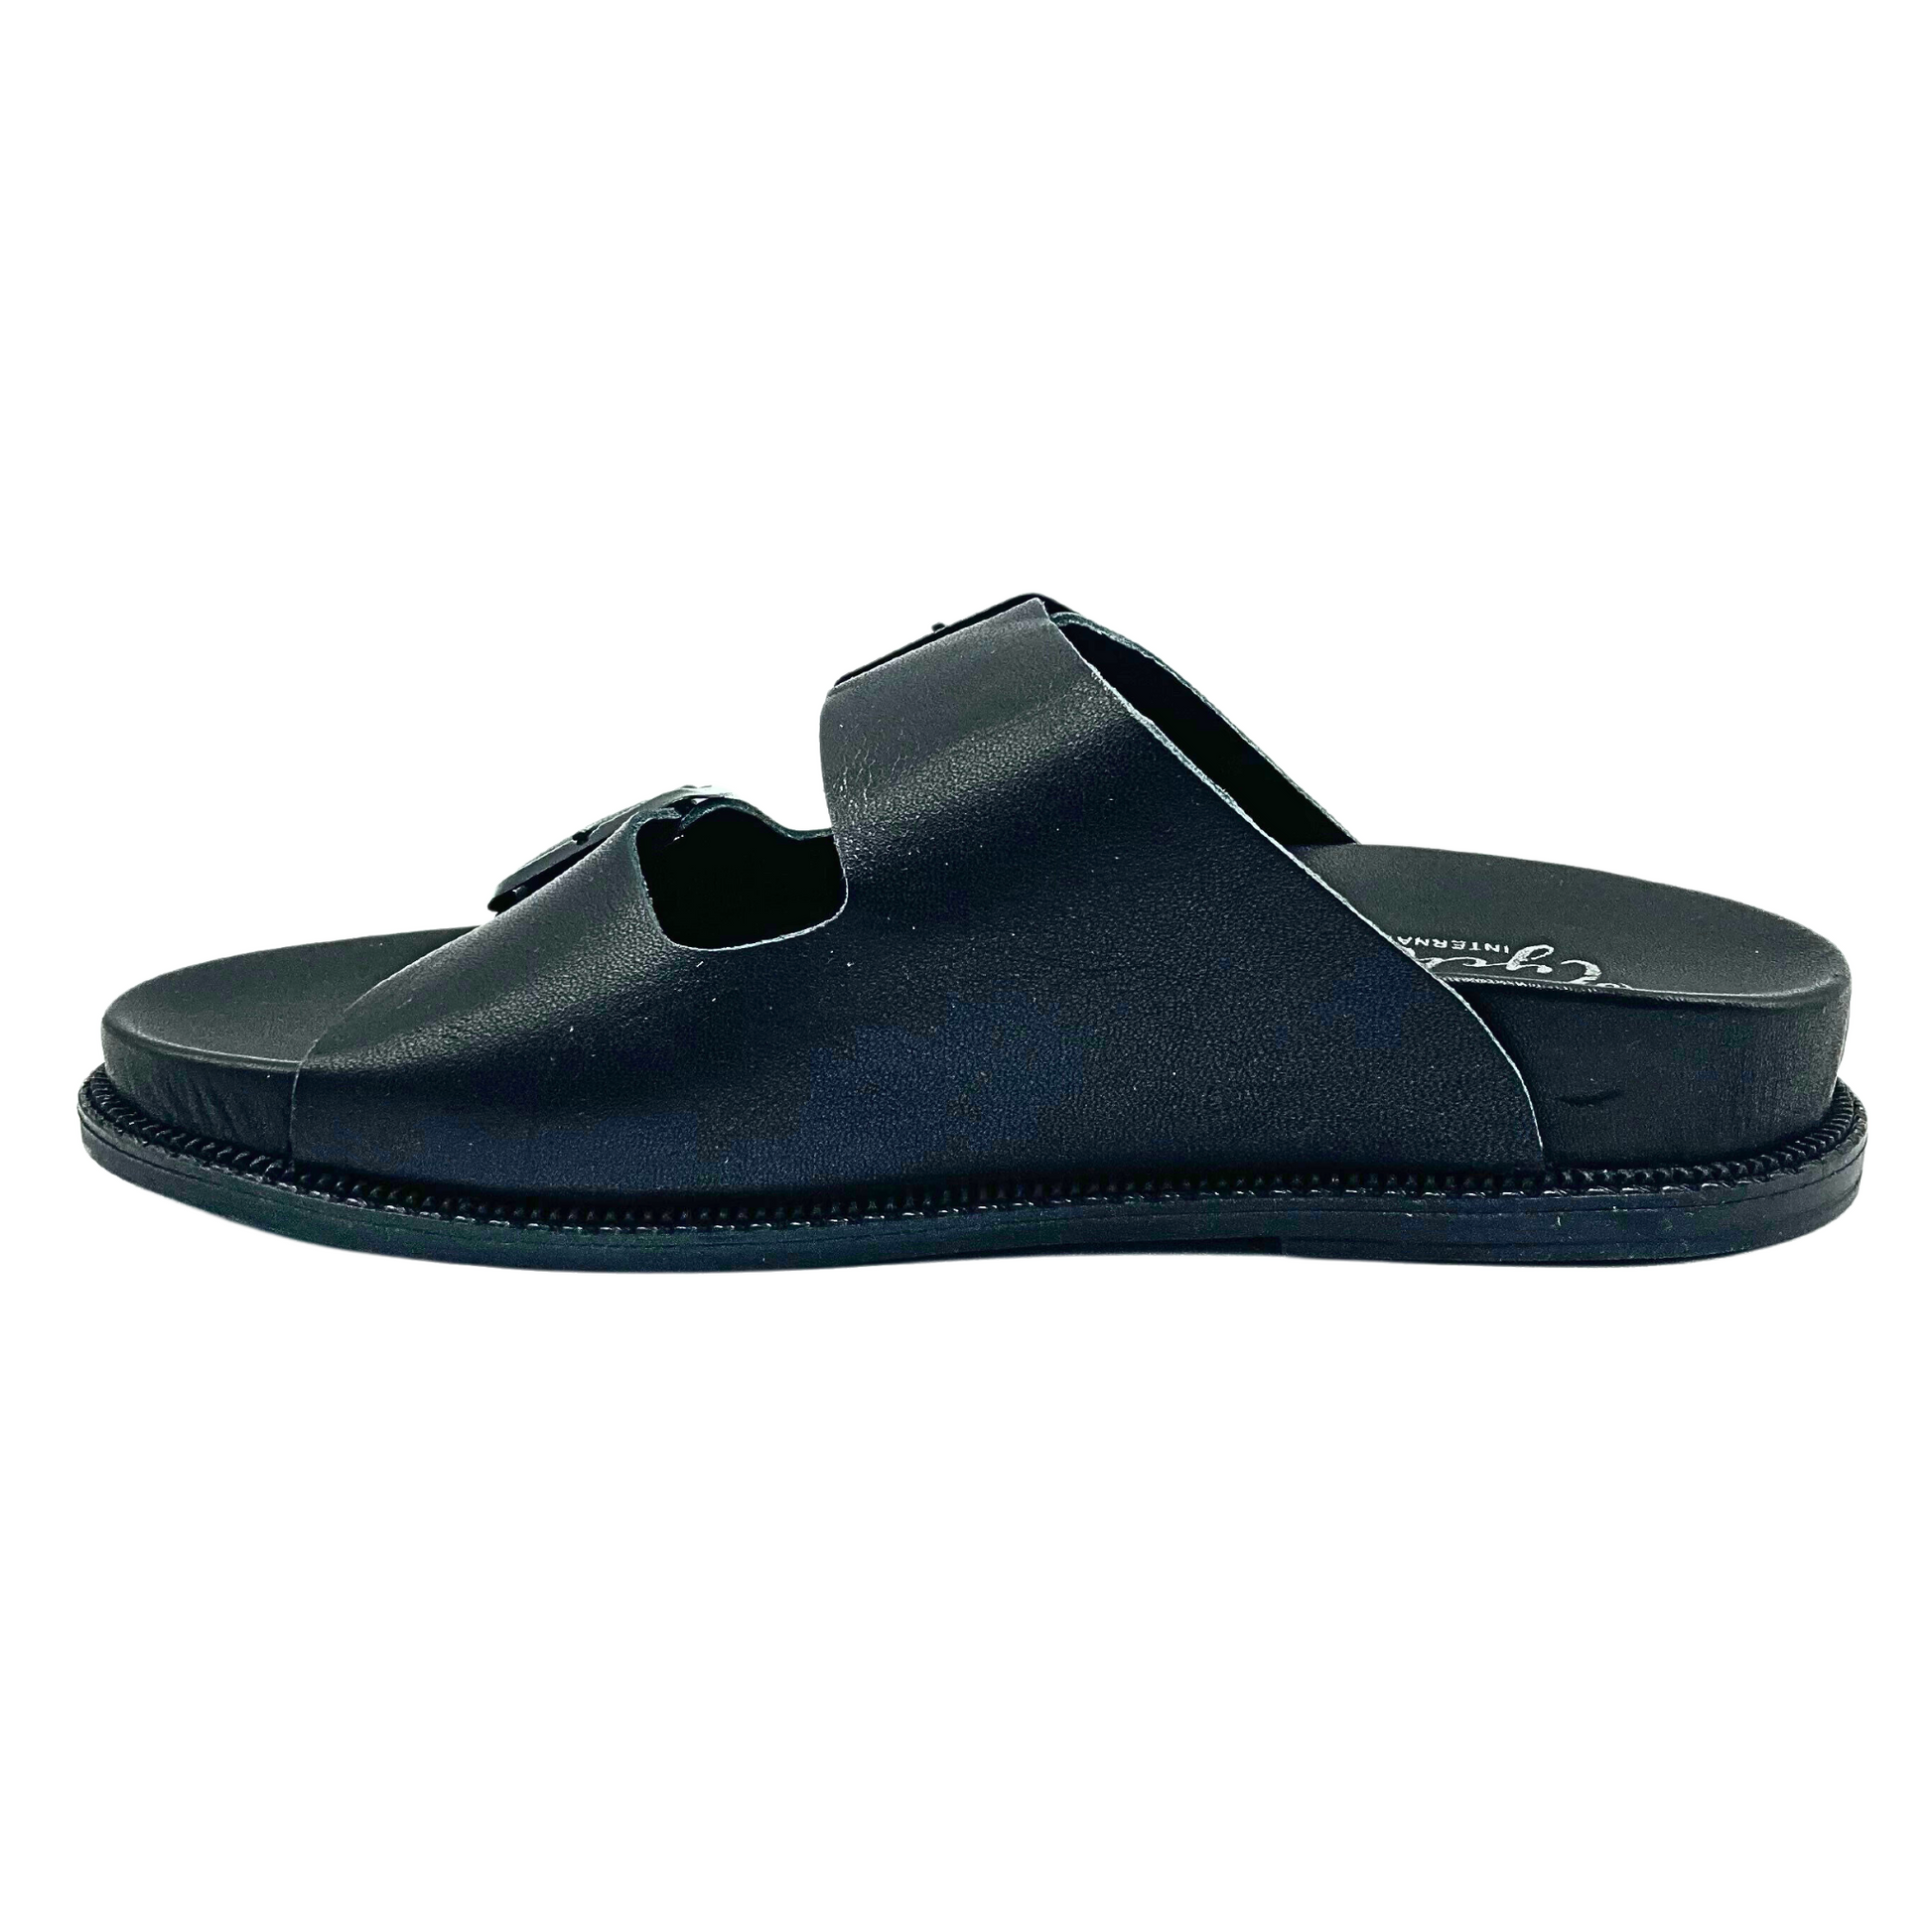 Inside view of black, slip on walking sandal.  Open toe and heel.  Erogonomic footbed